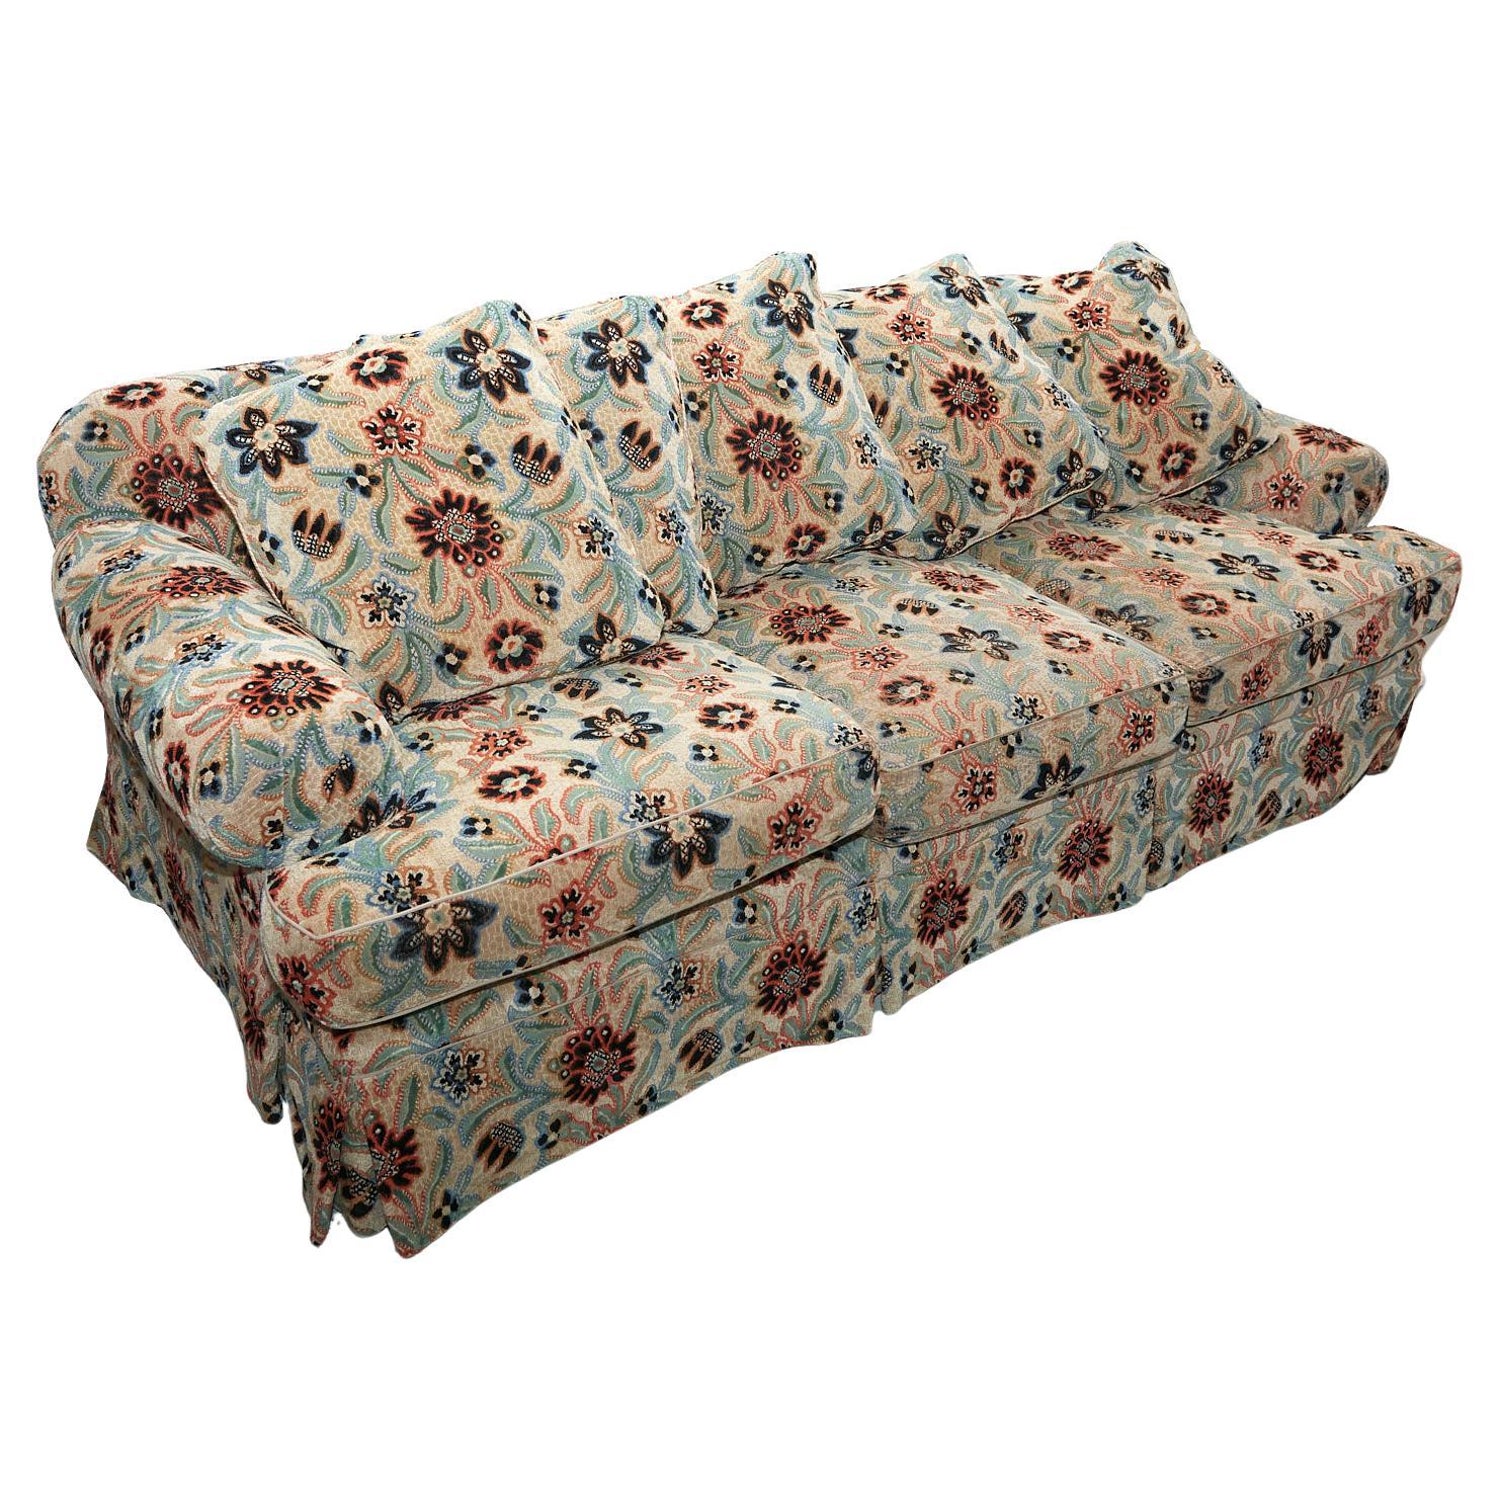 Floral Upholstered Sofa - 3 For Sale on 1stDibs | floral sofa for sale,  floral print sofas for sale, upholstered sofas